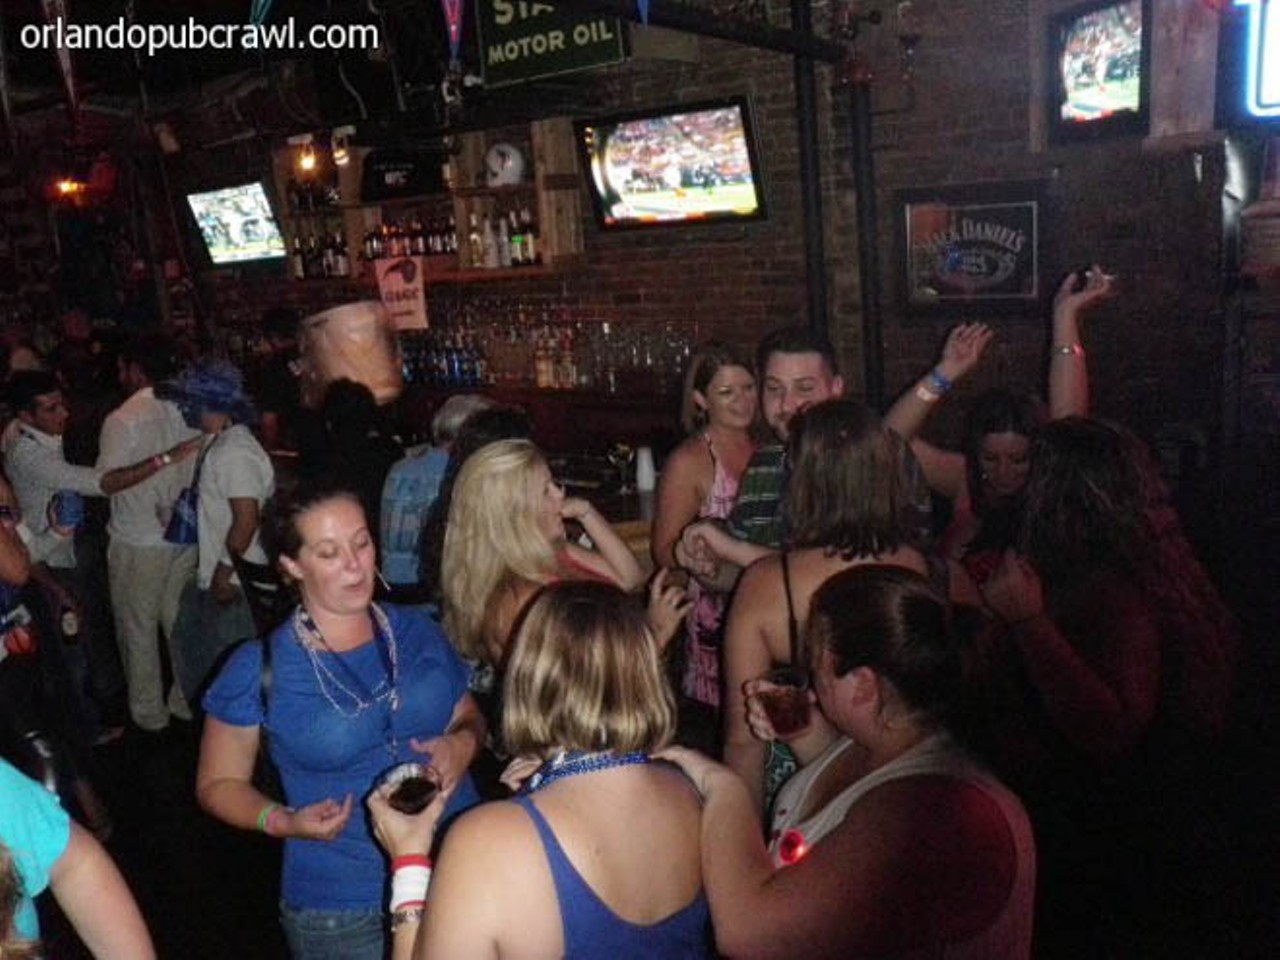 17 photos of what to expect at the Orlando Magic Pub Crawl